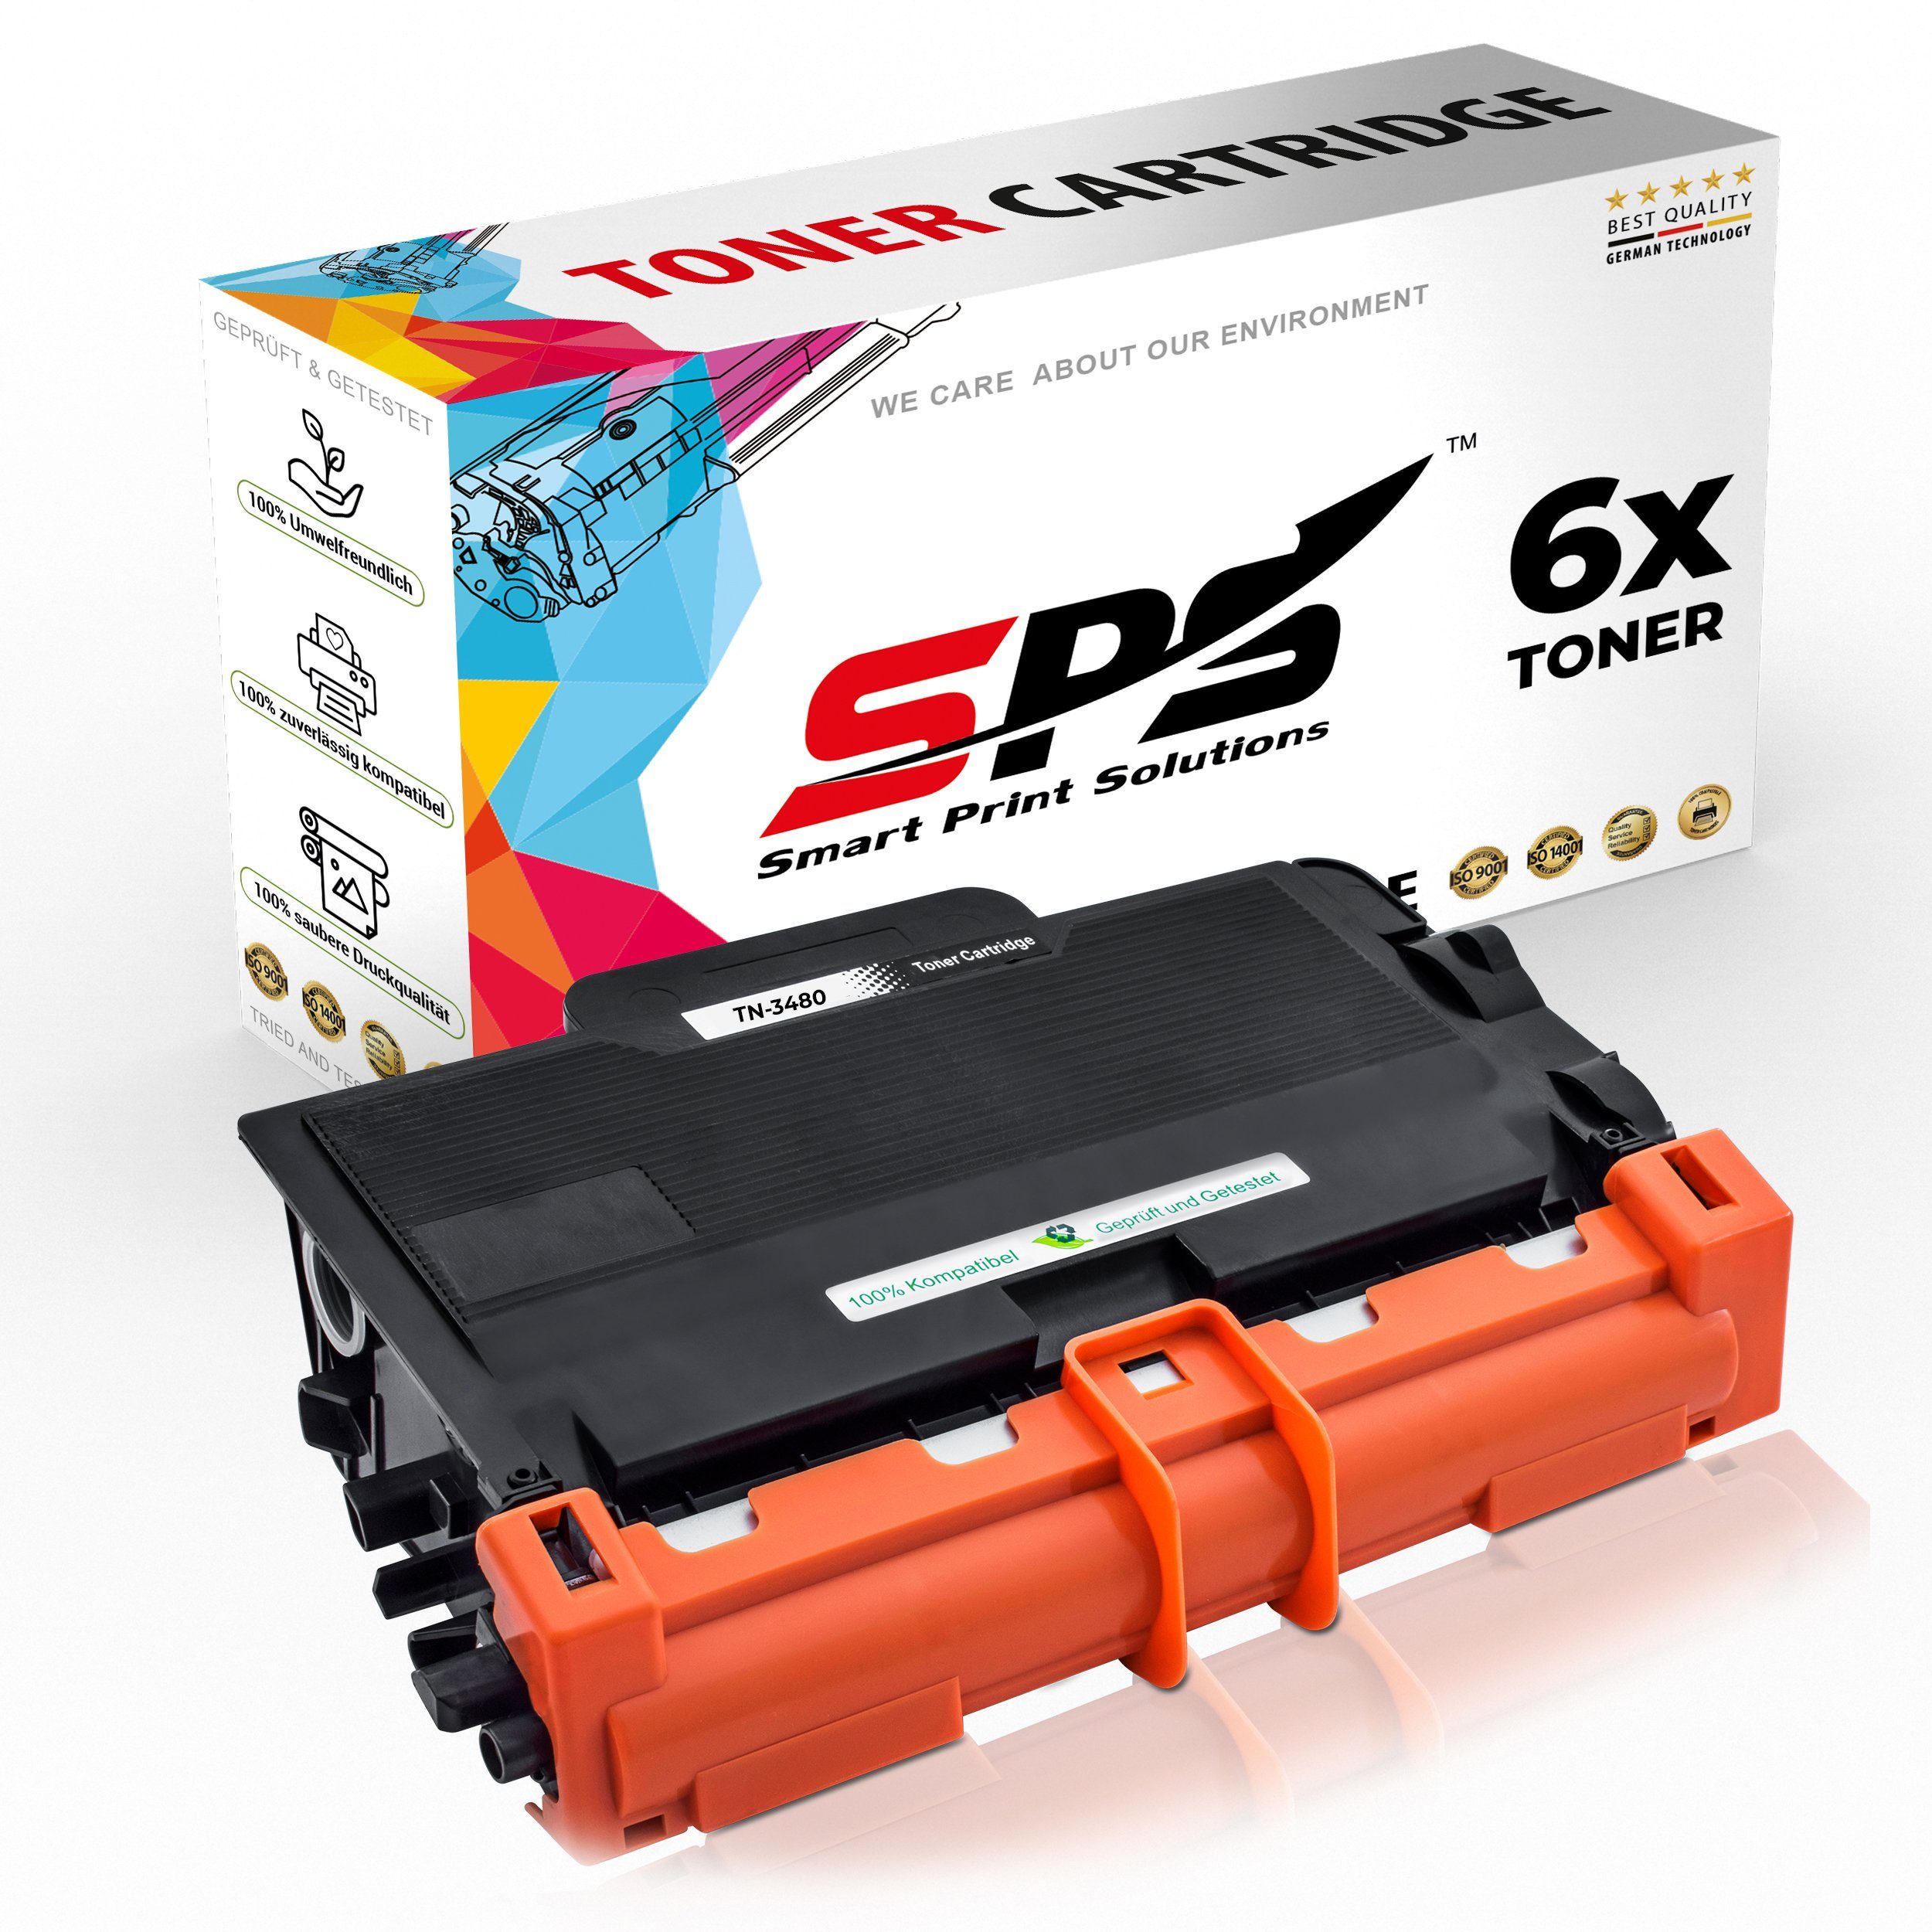 SPS Tonerkartusche Kompatibel für Brother DCP-L5600 TN-3430, (6er Pack) | Tonerpatronen